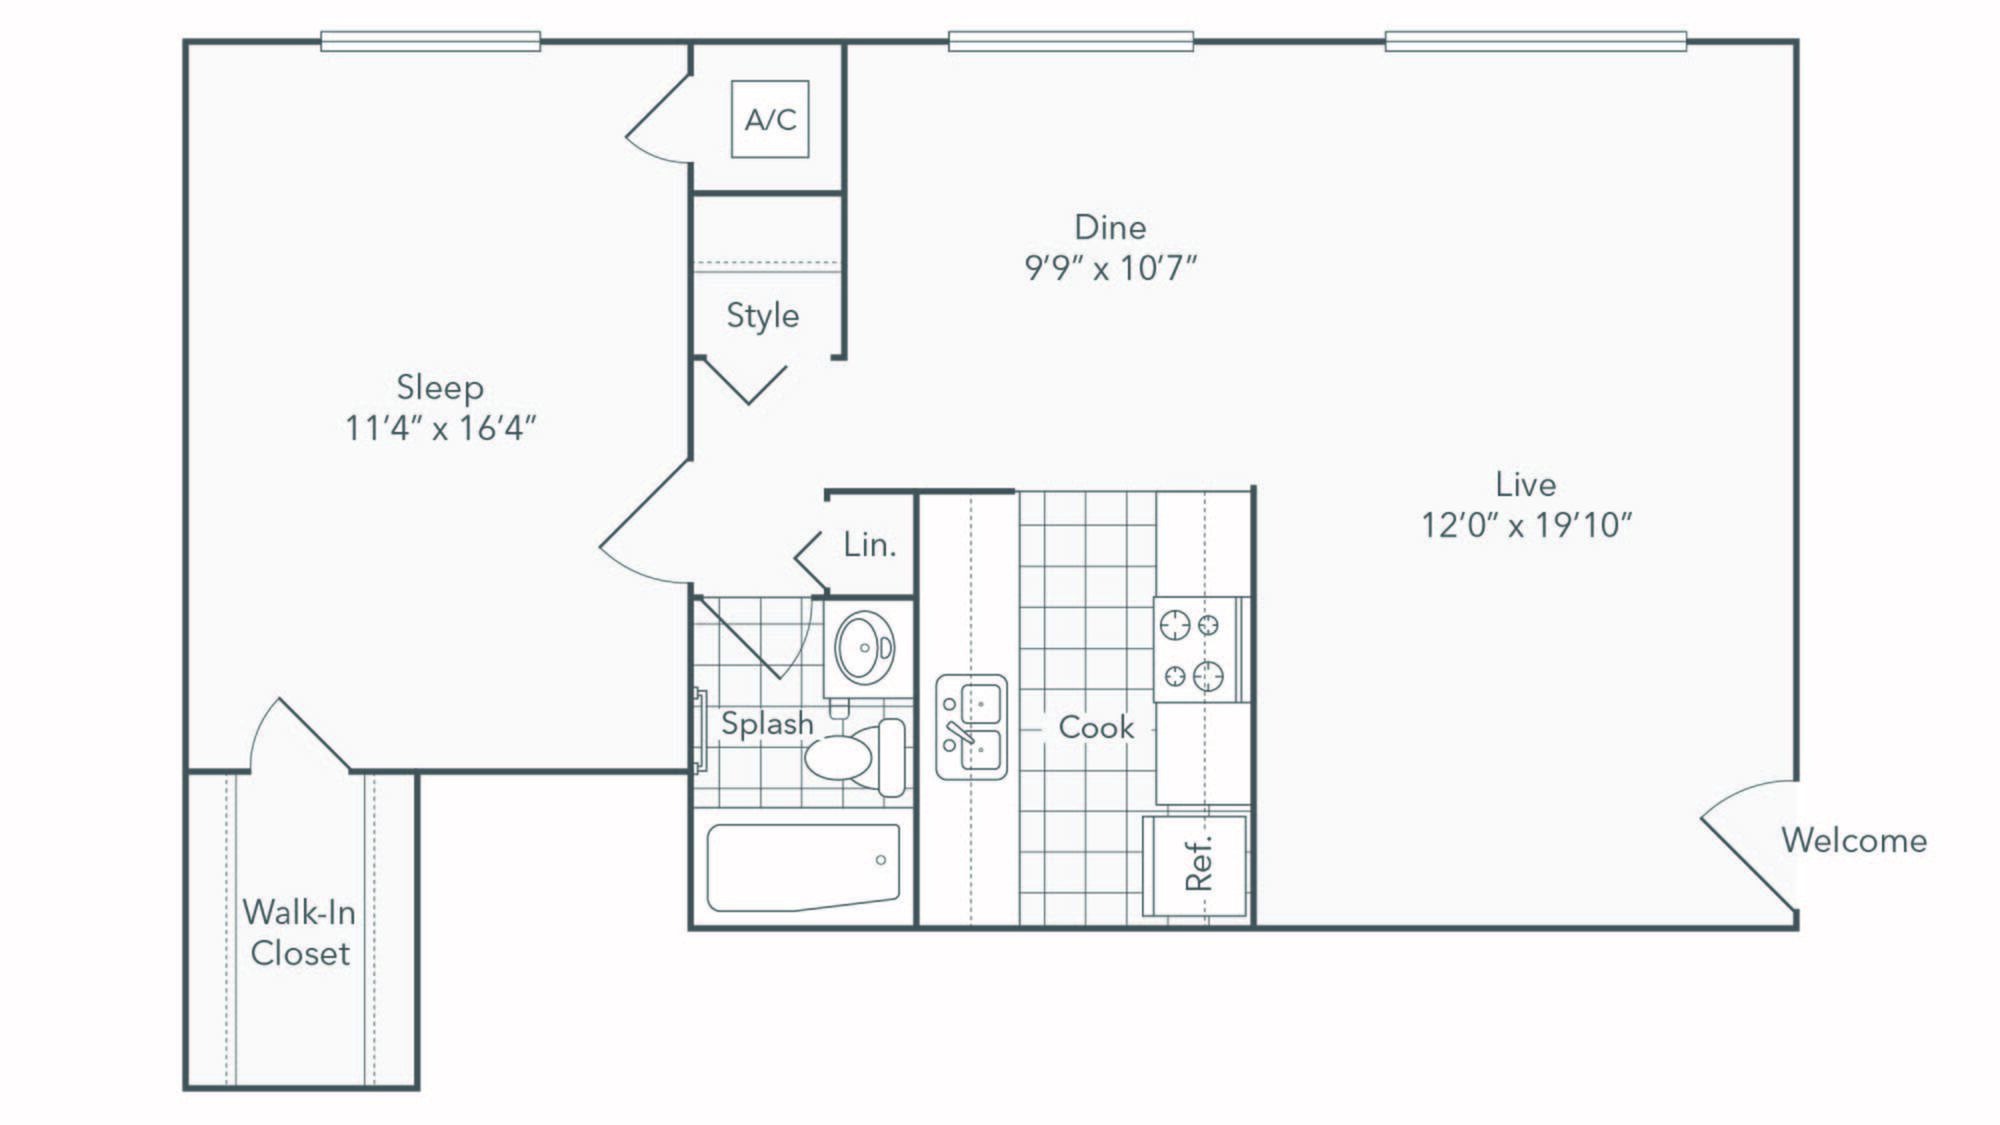 renew springfield arlington floorplan 1-bed